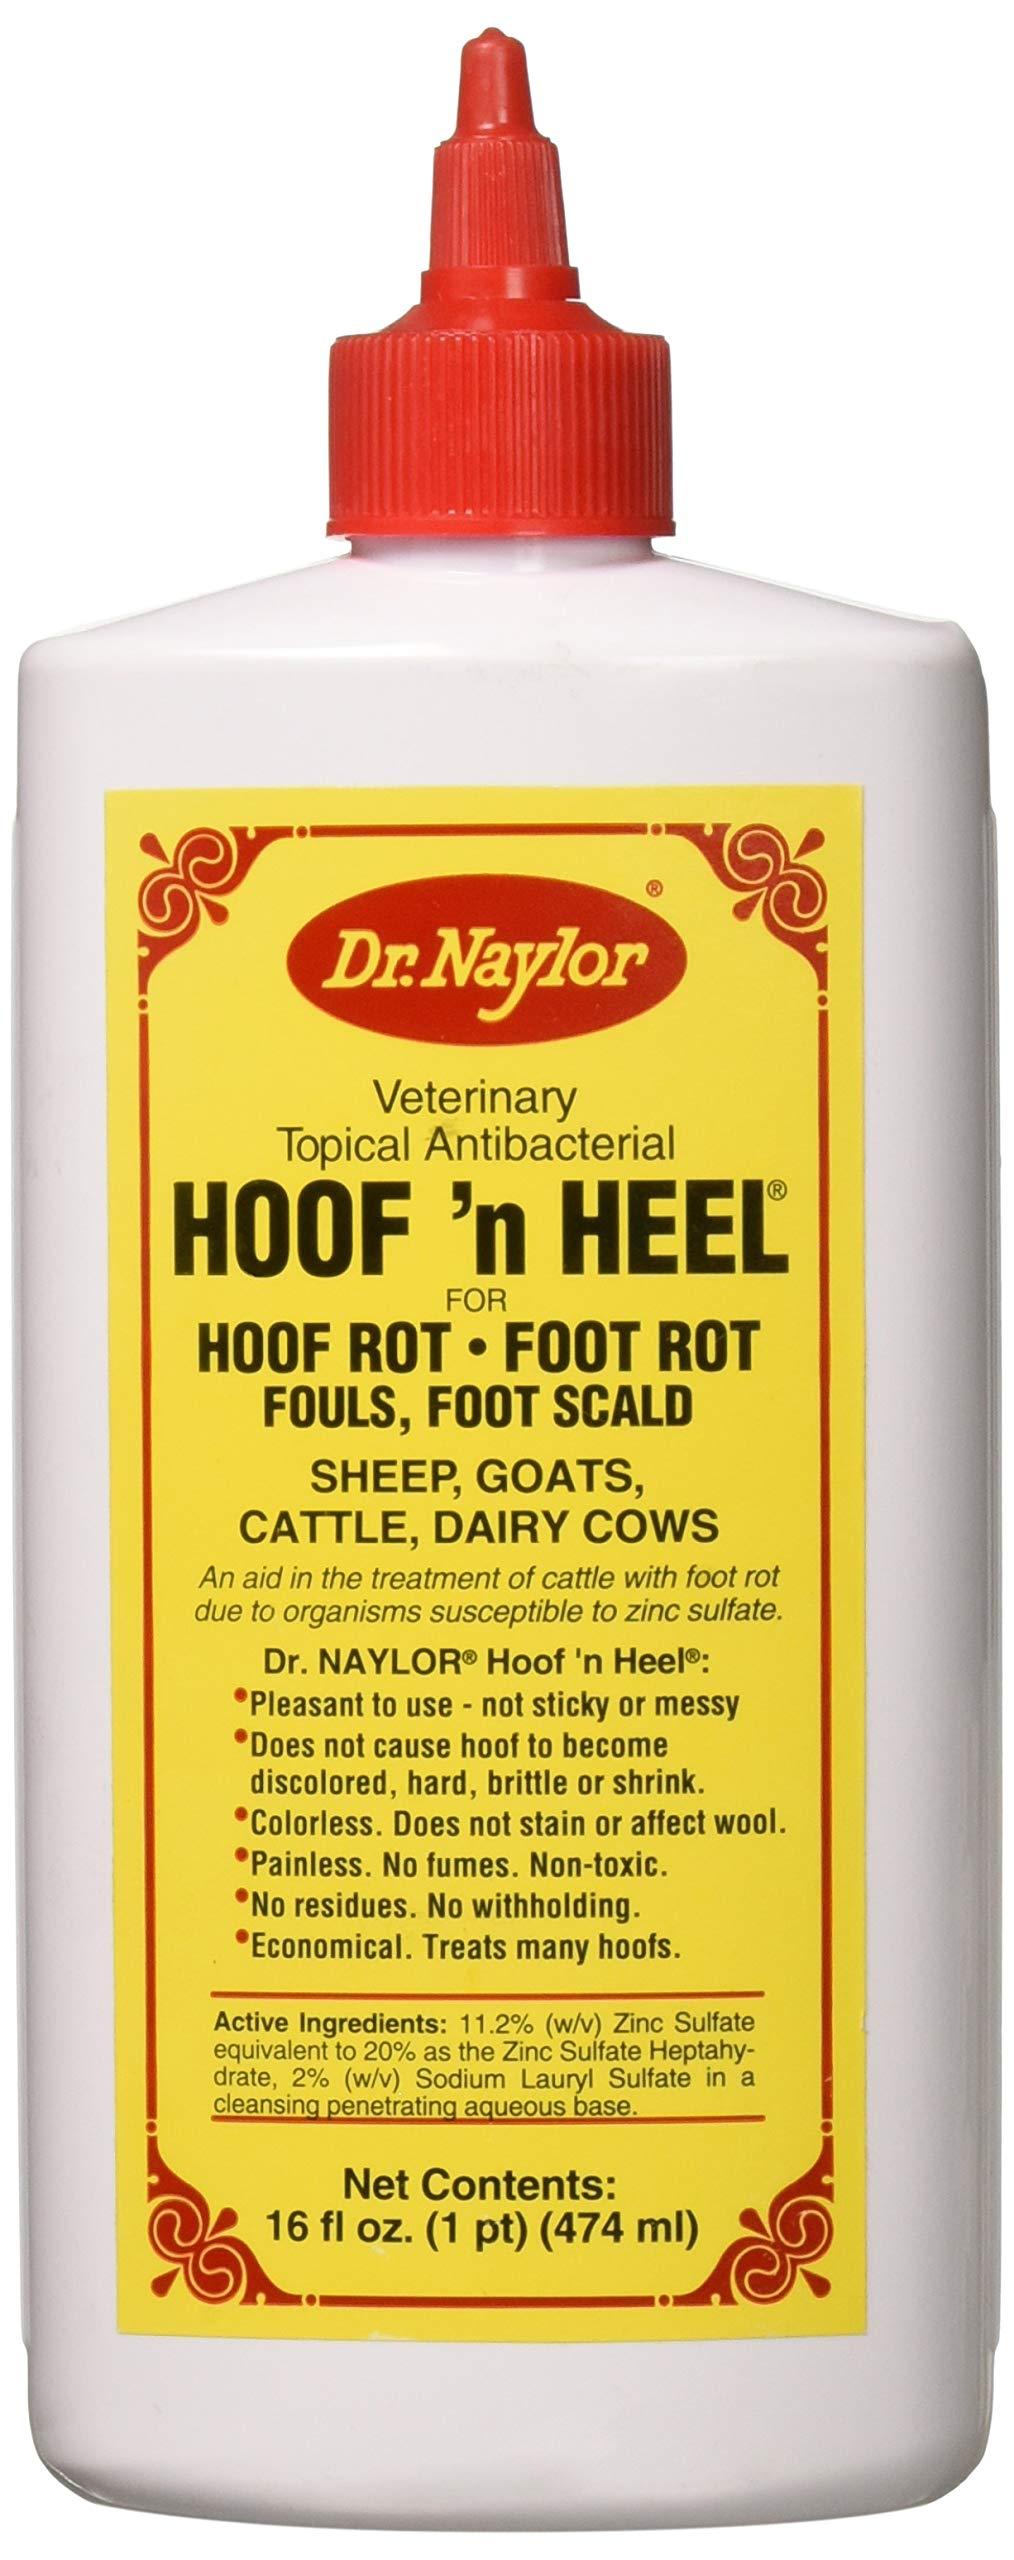 Dr. Naylor Hoof n' Heel (16 oz.) - Traditional Foot Rot Treatment - PawsPlanet Australia